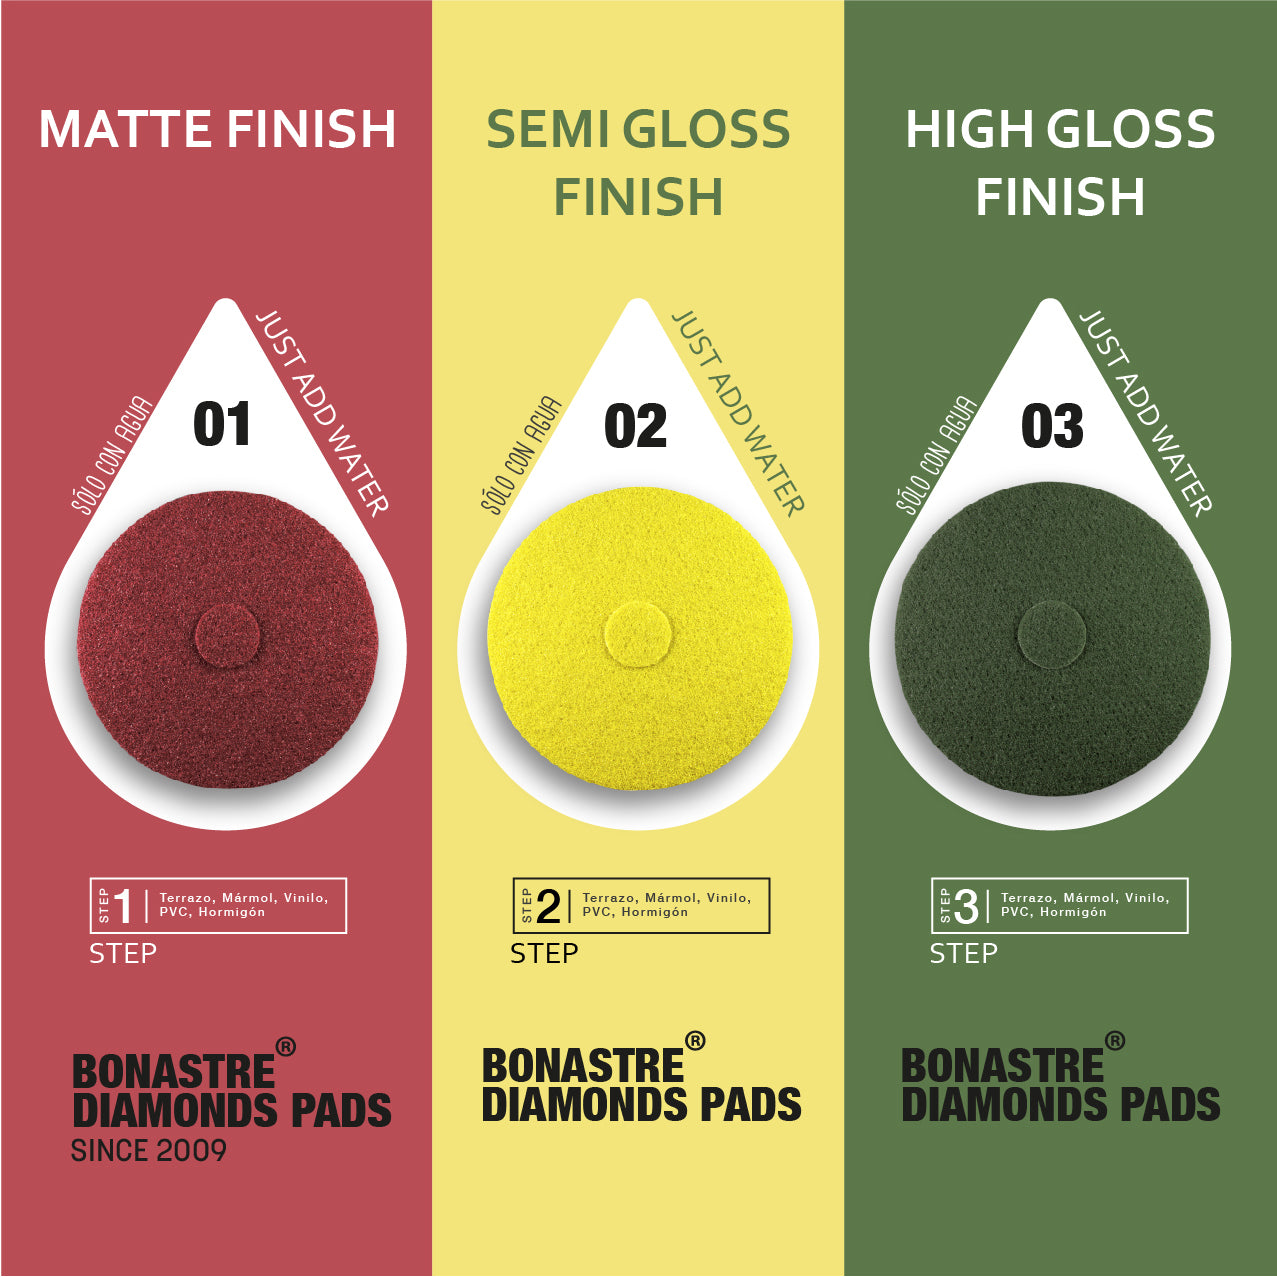 Bonastre DIP Step-3 GREEN / High Gloss Finish Case of 5